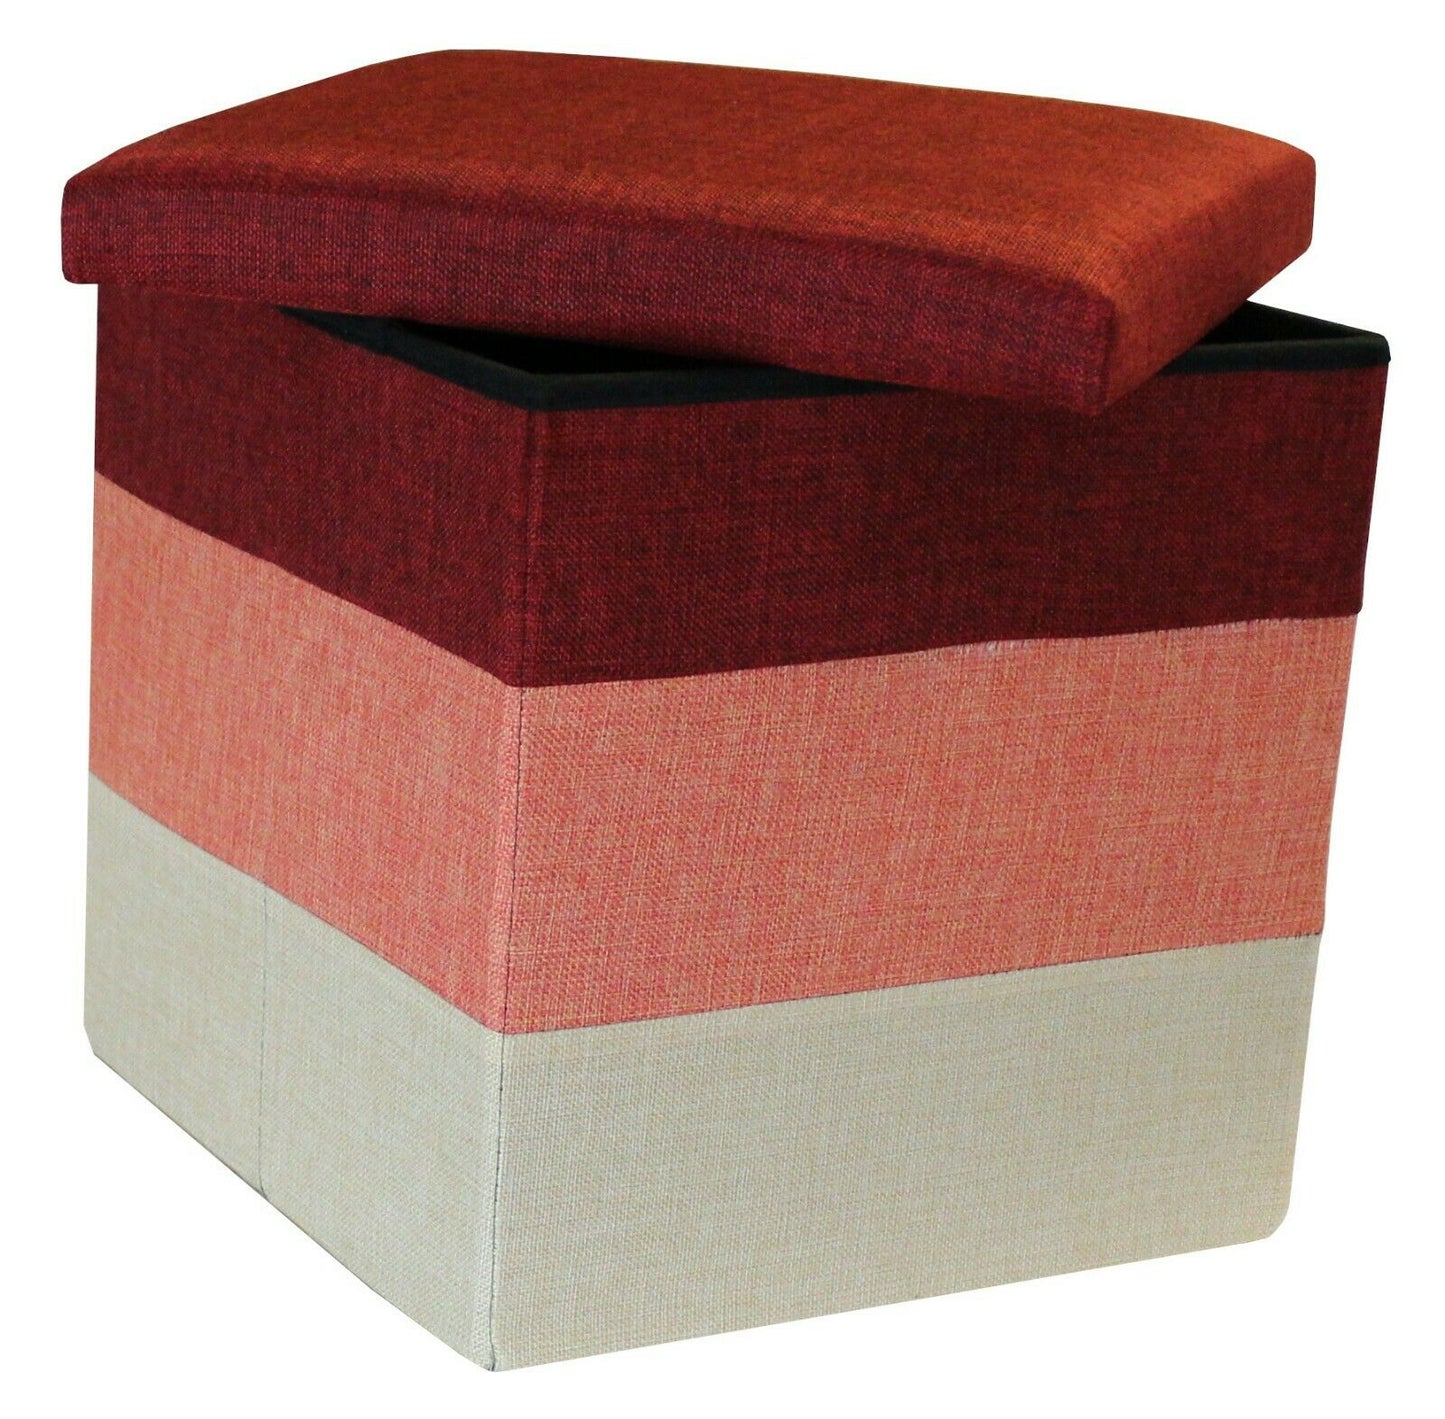 Linear Storage Ottoman Red Orange Natural Three Tone Foot Stool Seat Storage Box